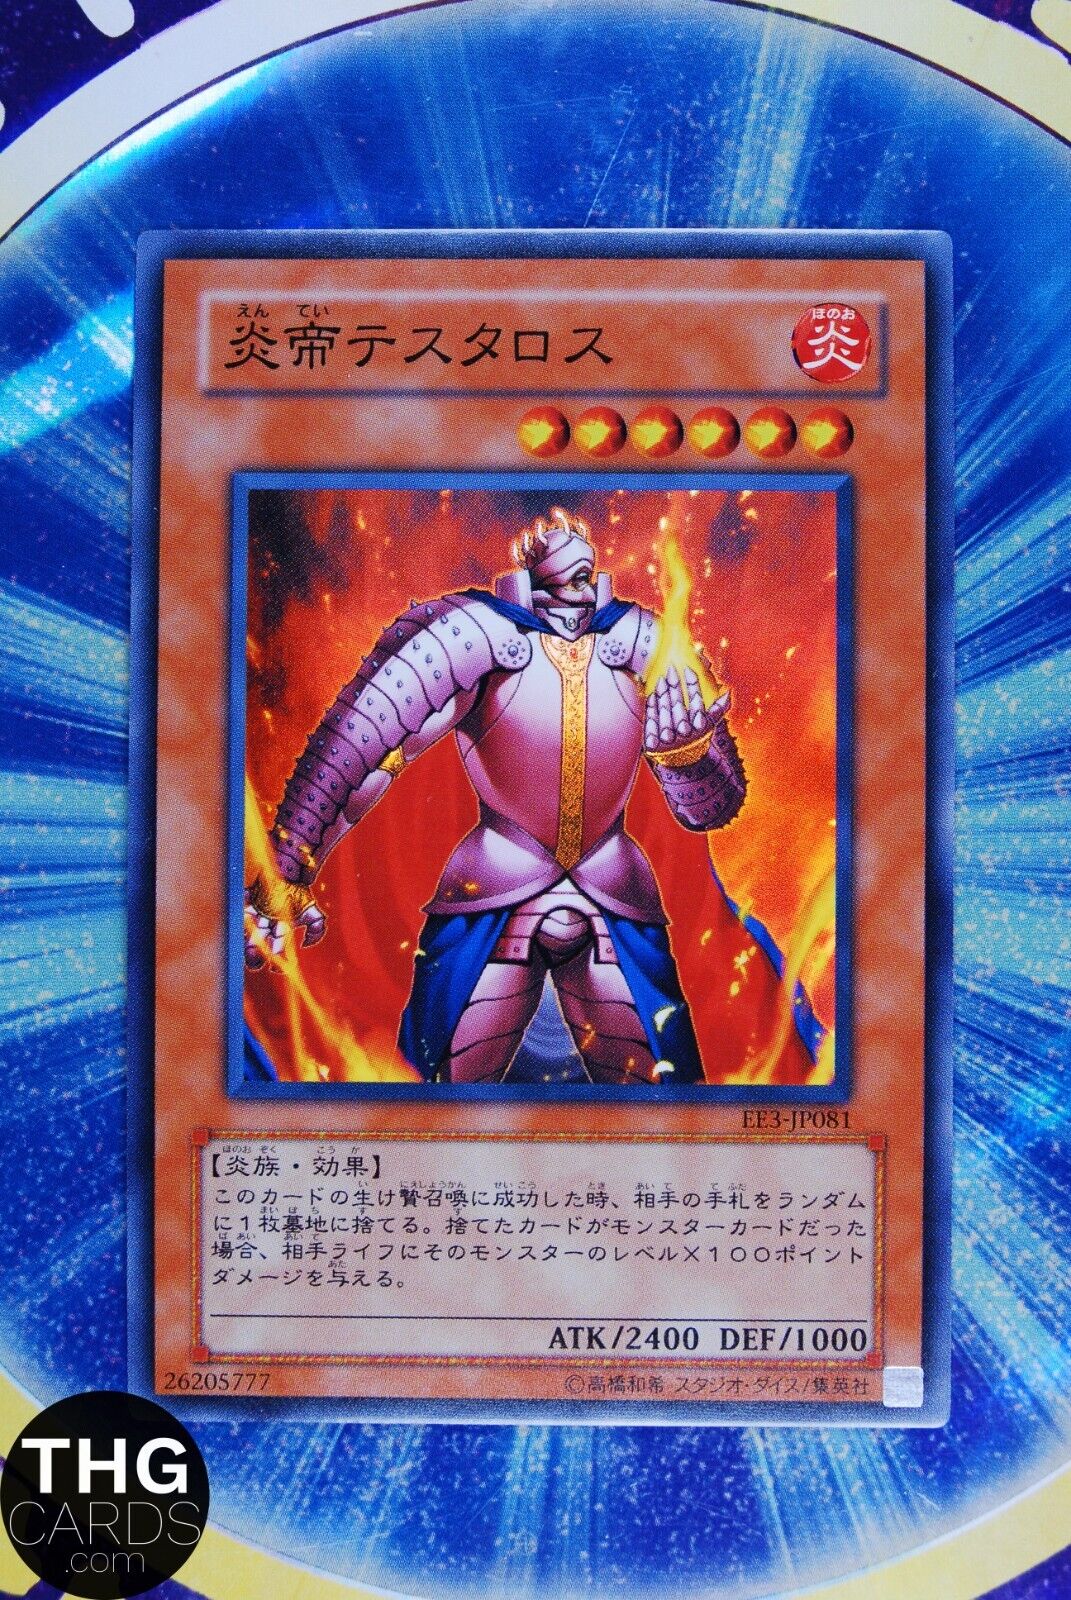 Thestalos the Fire Monarch EE3-JP081 Super Rare Yugioh Card Japanese